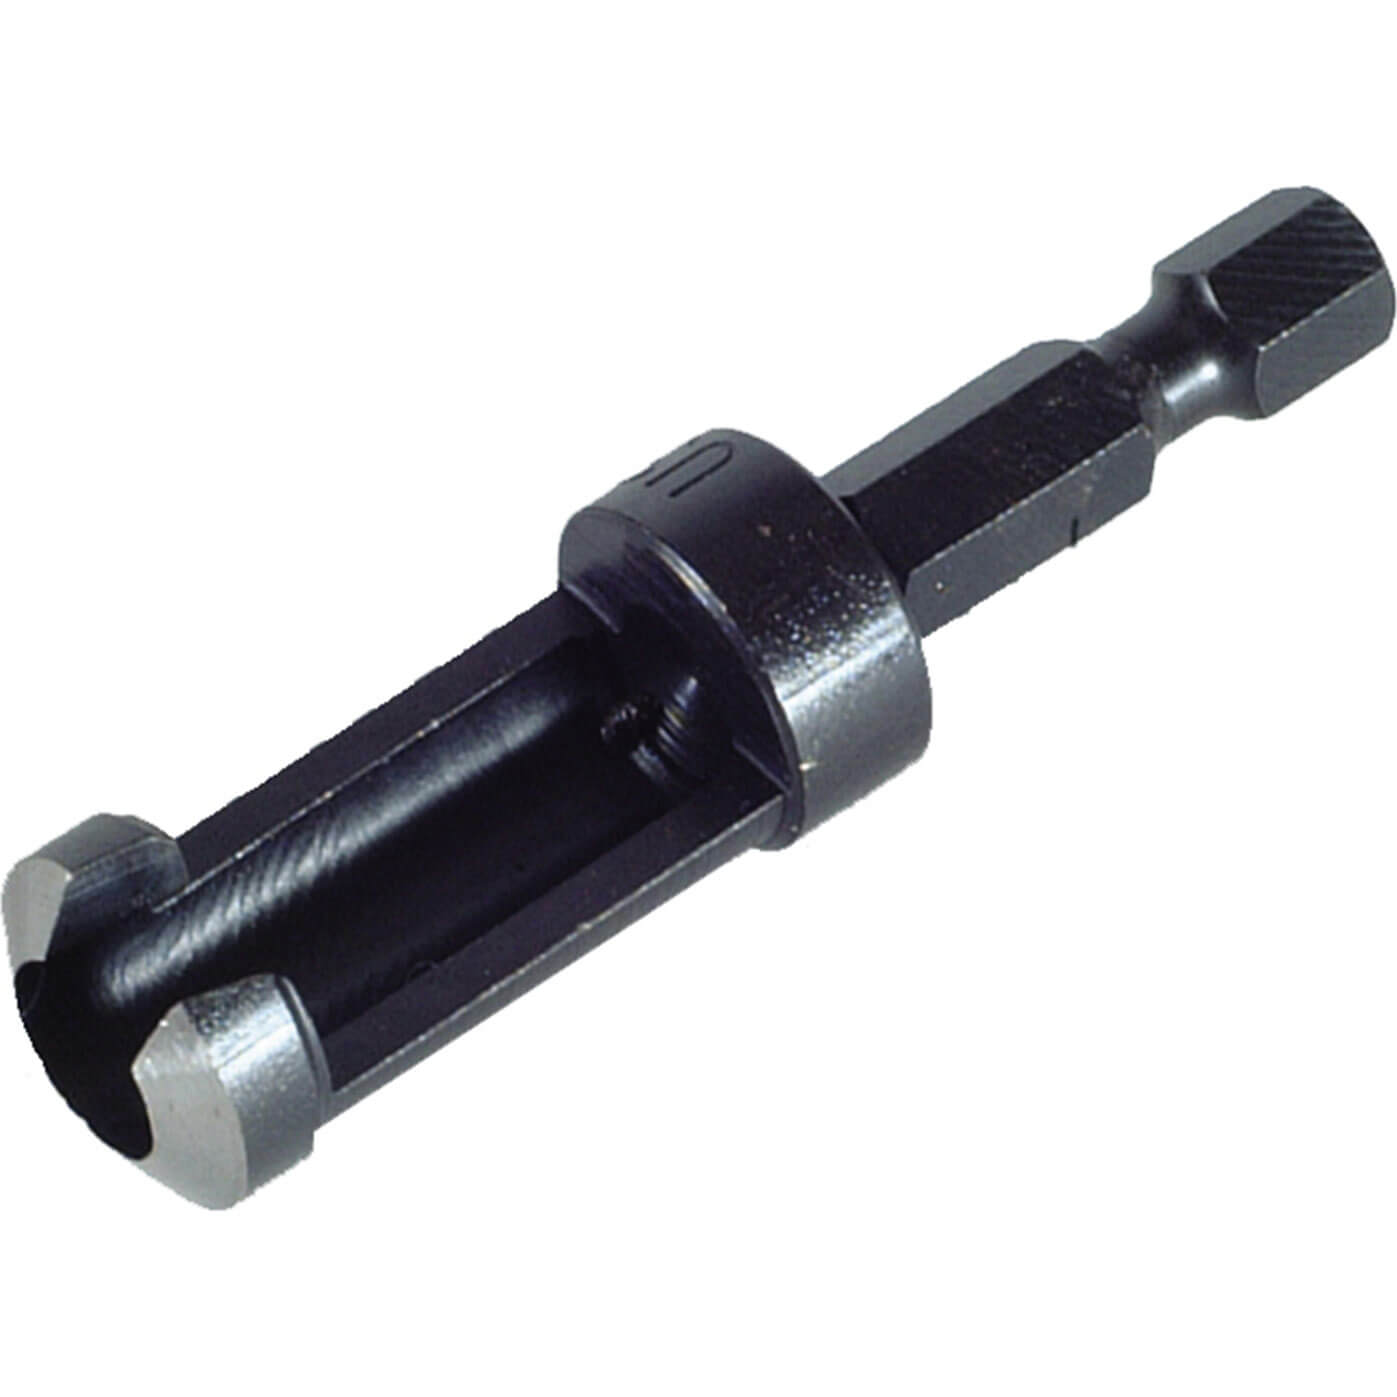 Image of Disston Plug Cutter Size 10